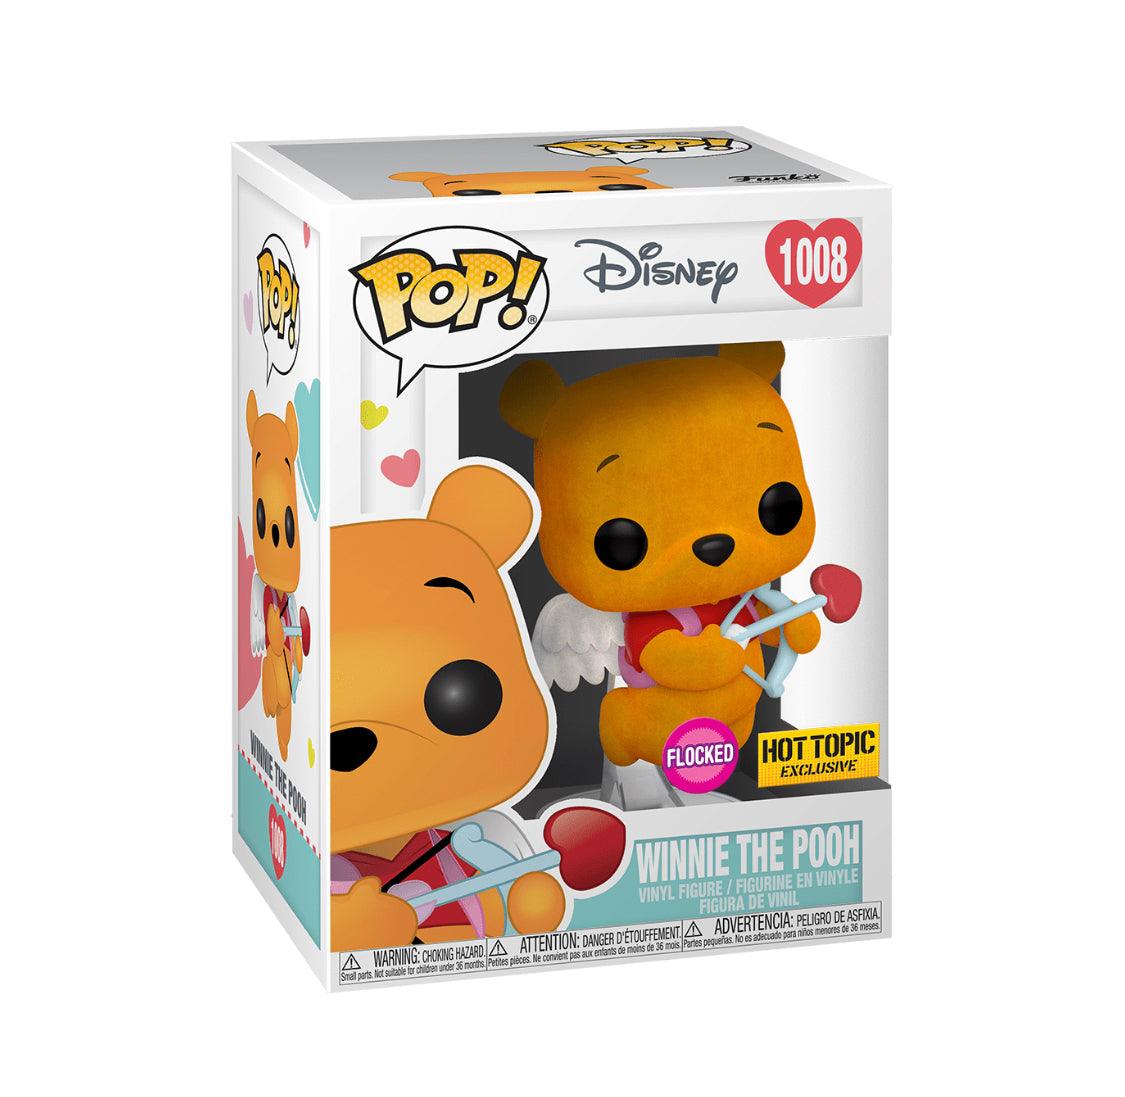 Pop! Disney - Winnie The Pooh - #1008 - FLOCKED Hot Topic EXCLUSIVE - Hobby Champion Inc